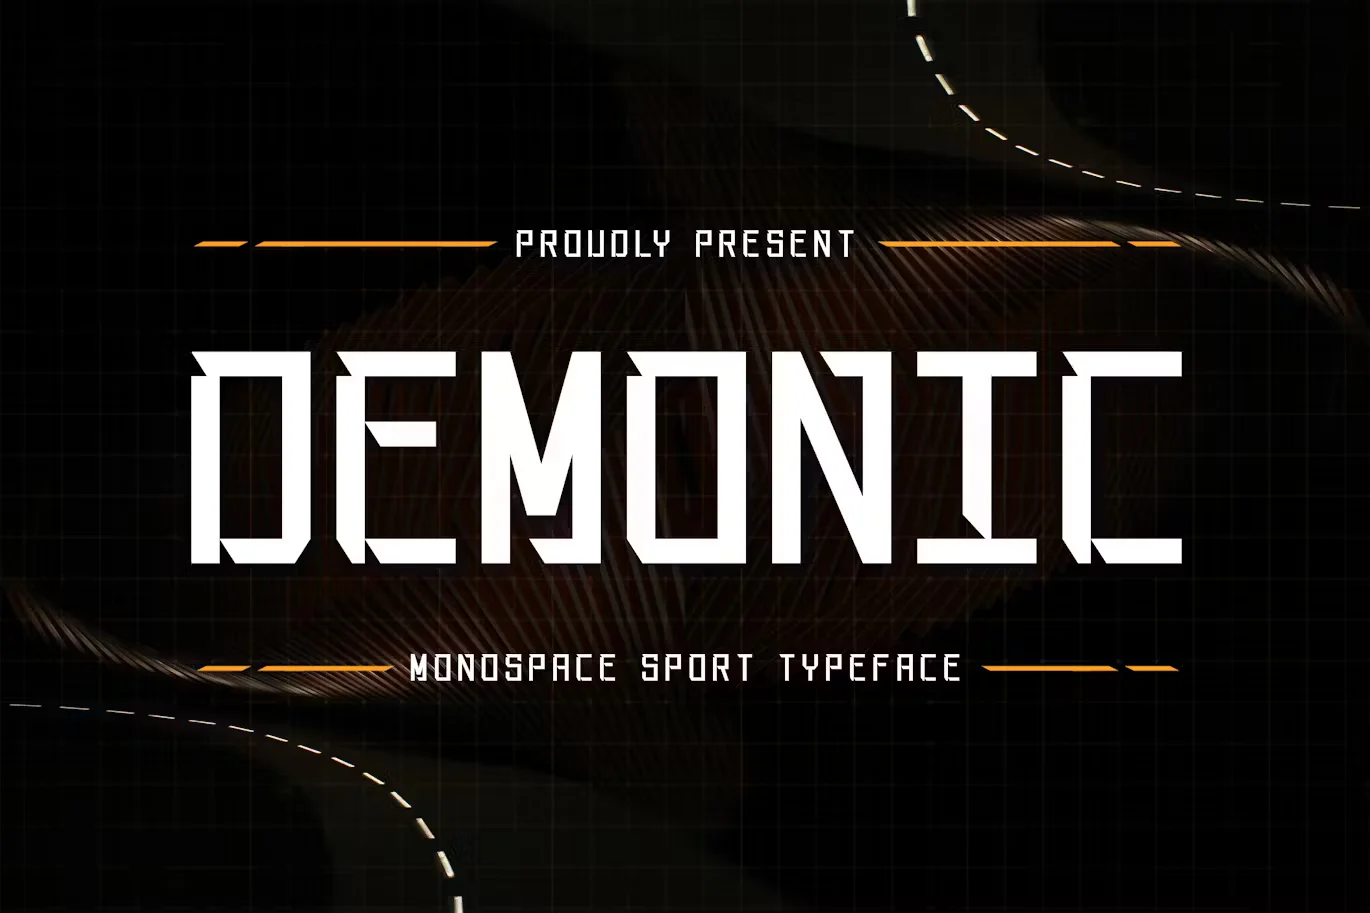 Demonic - Monospace Sport Typeface